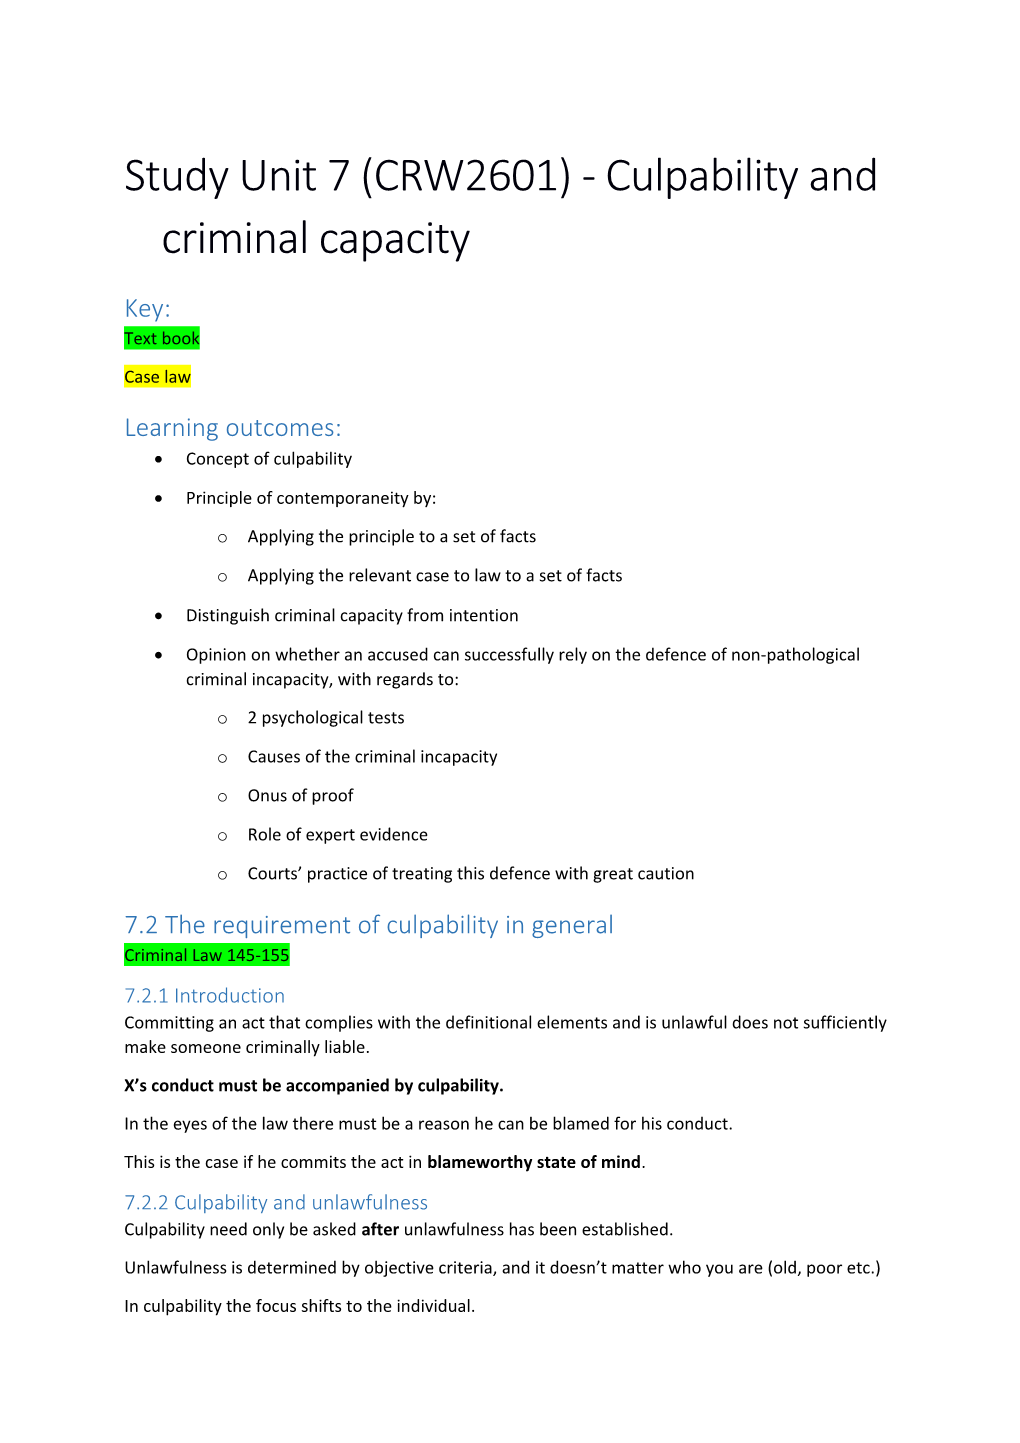 Study Unit 7 (CRW2601) - Culpability and Criminal Capacity